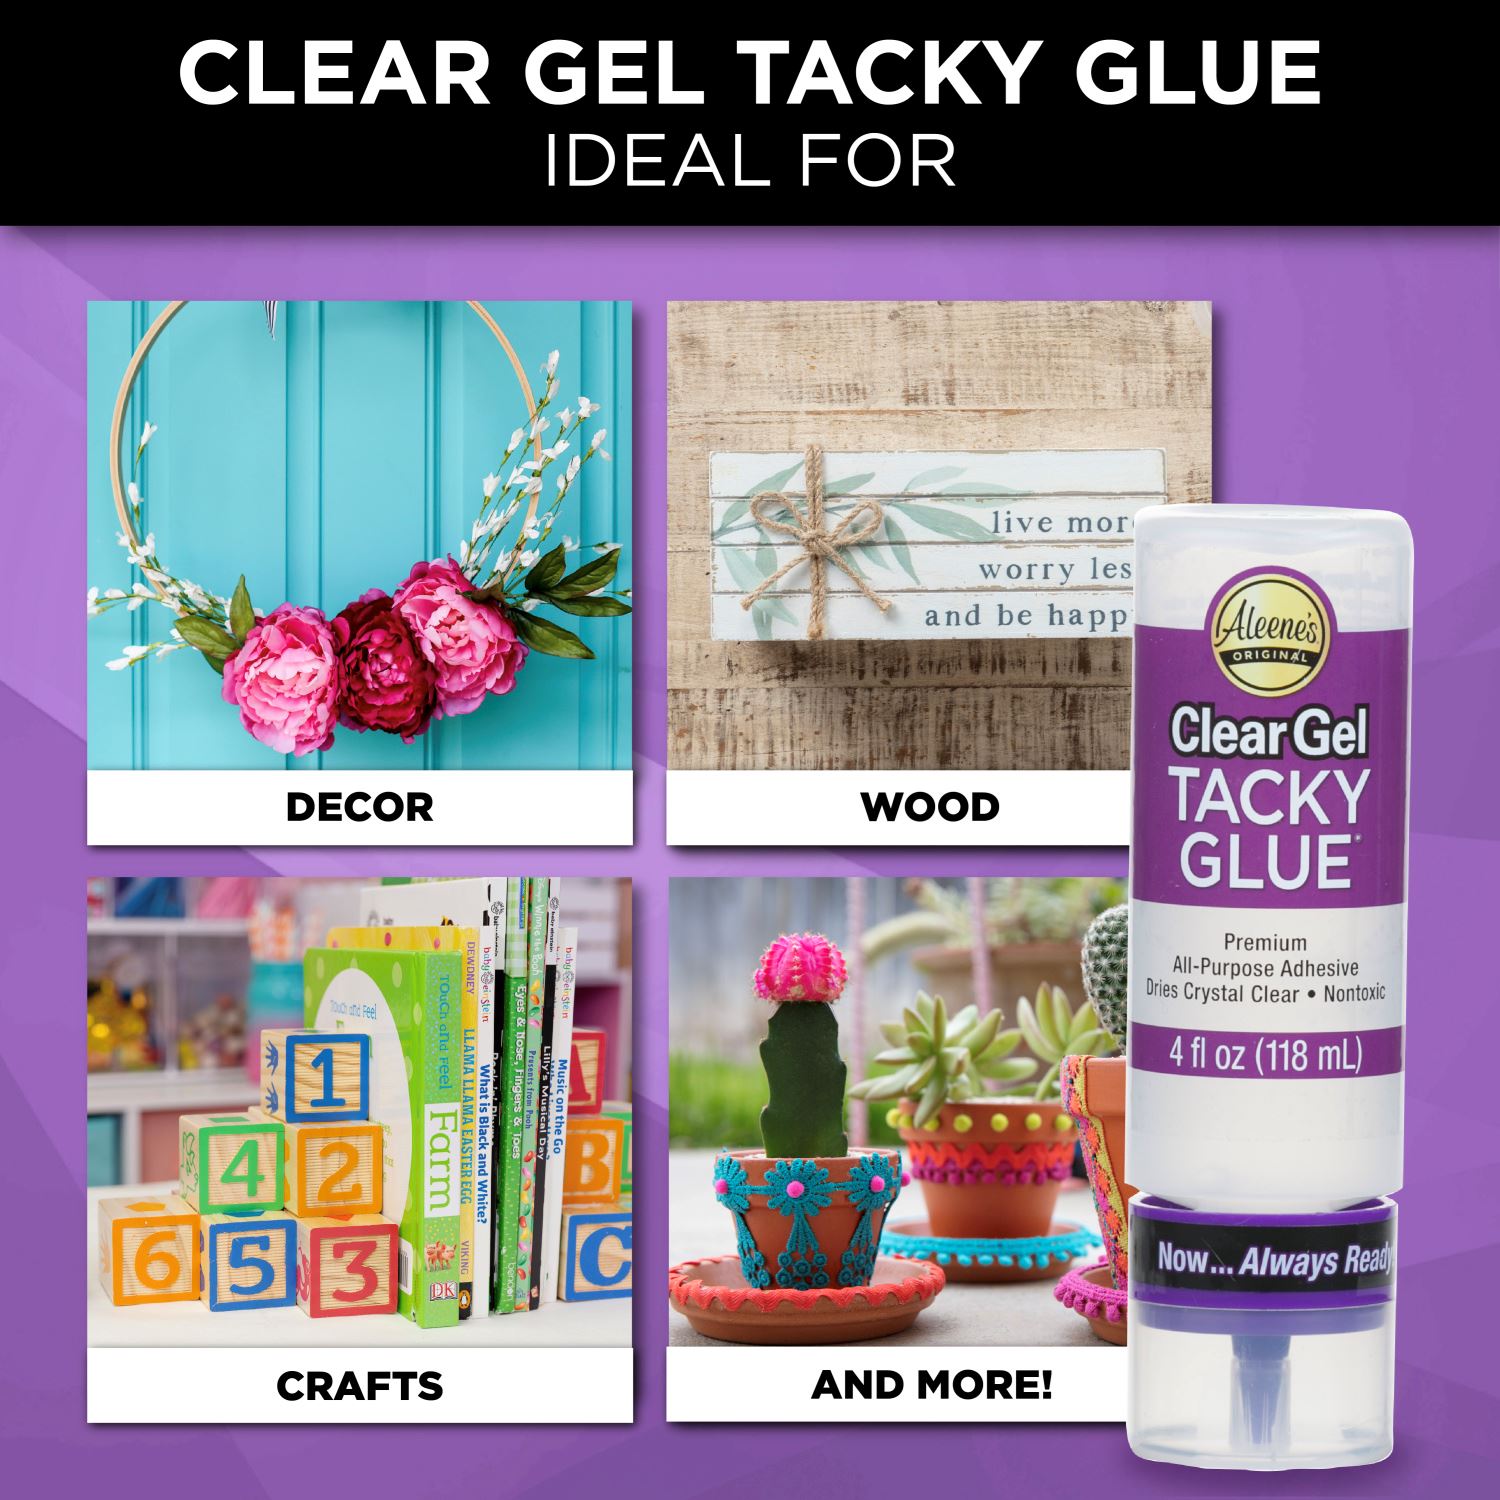 Aleene's Original Clear Gel Tacky Glue 8 fl. oz.